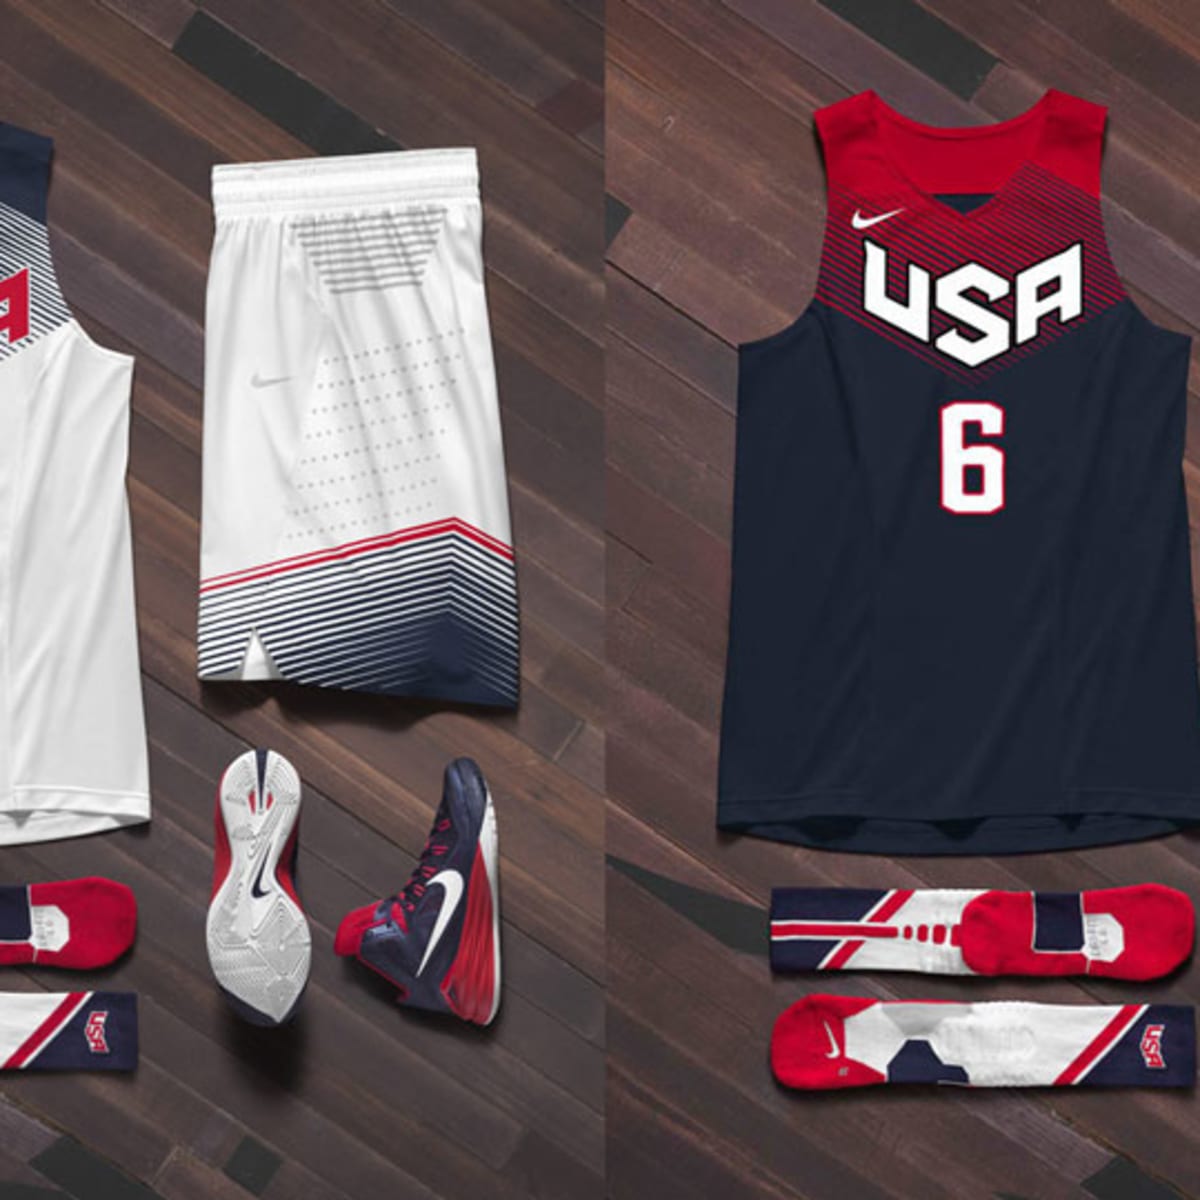 olympic basketball uniforms